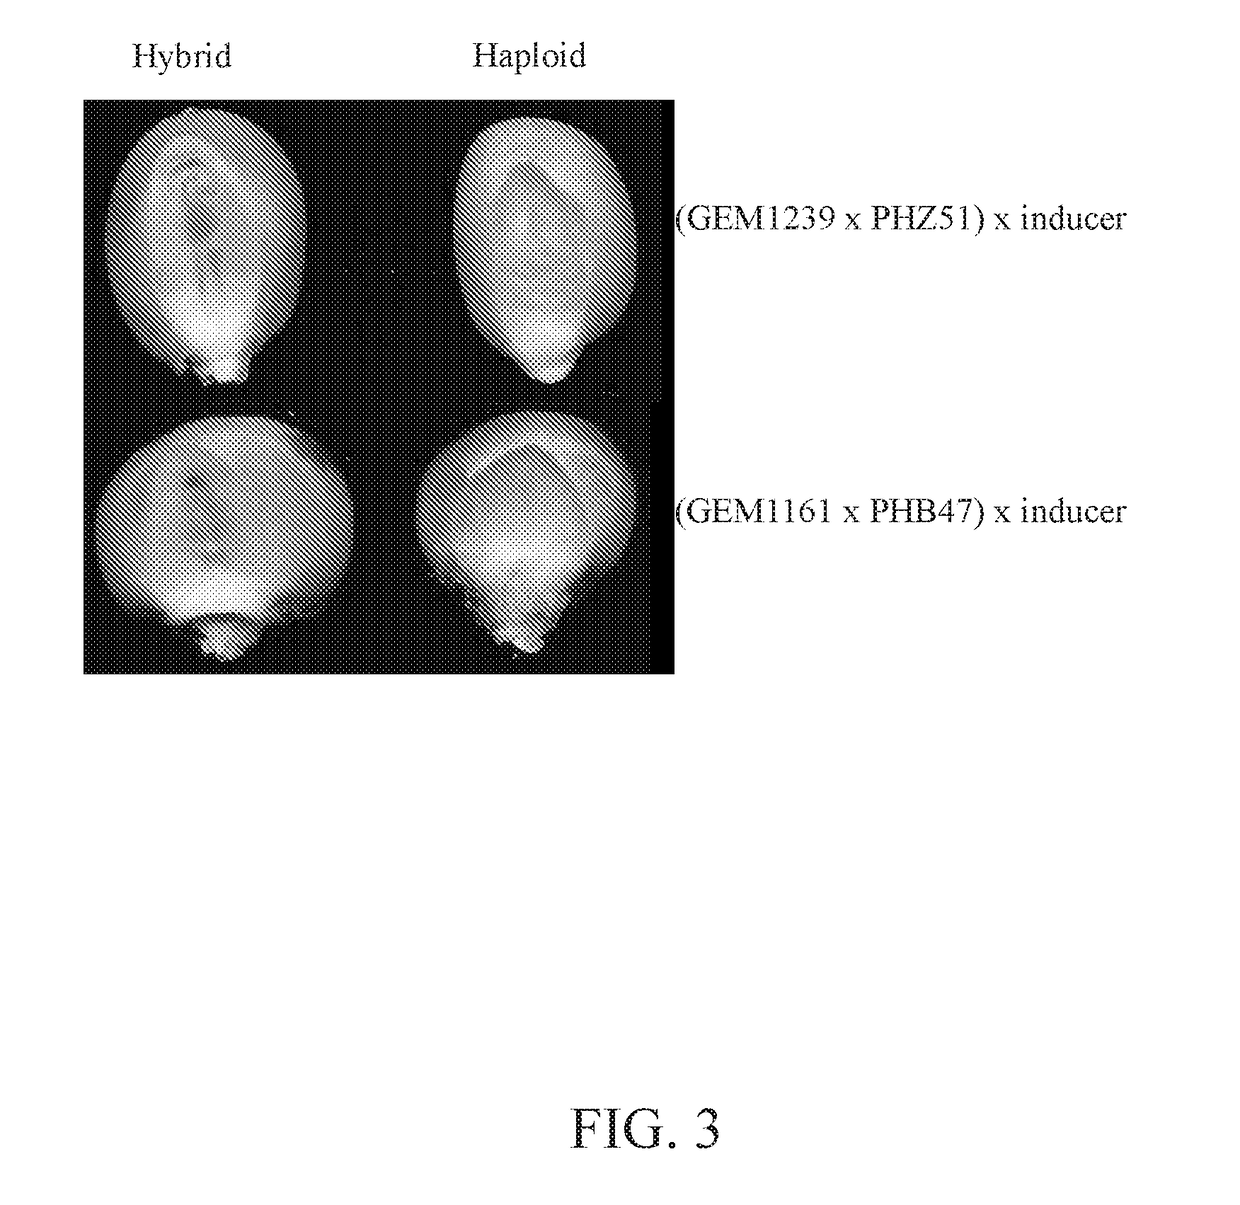 Haploid seed classification using single seed near-infrared spectroscopy